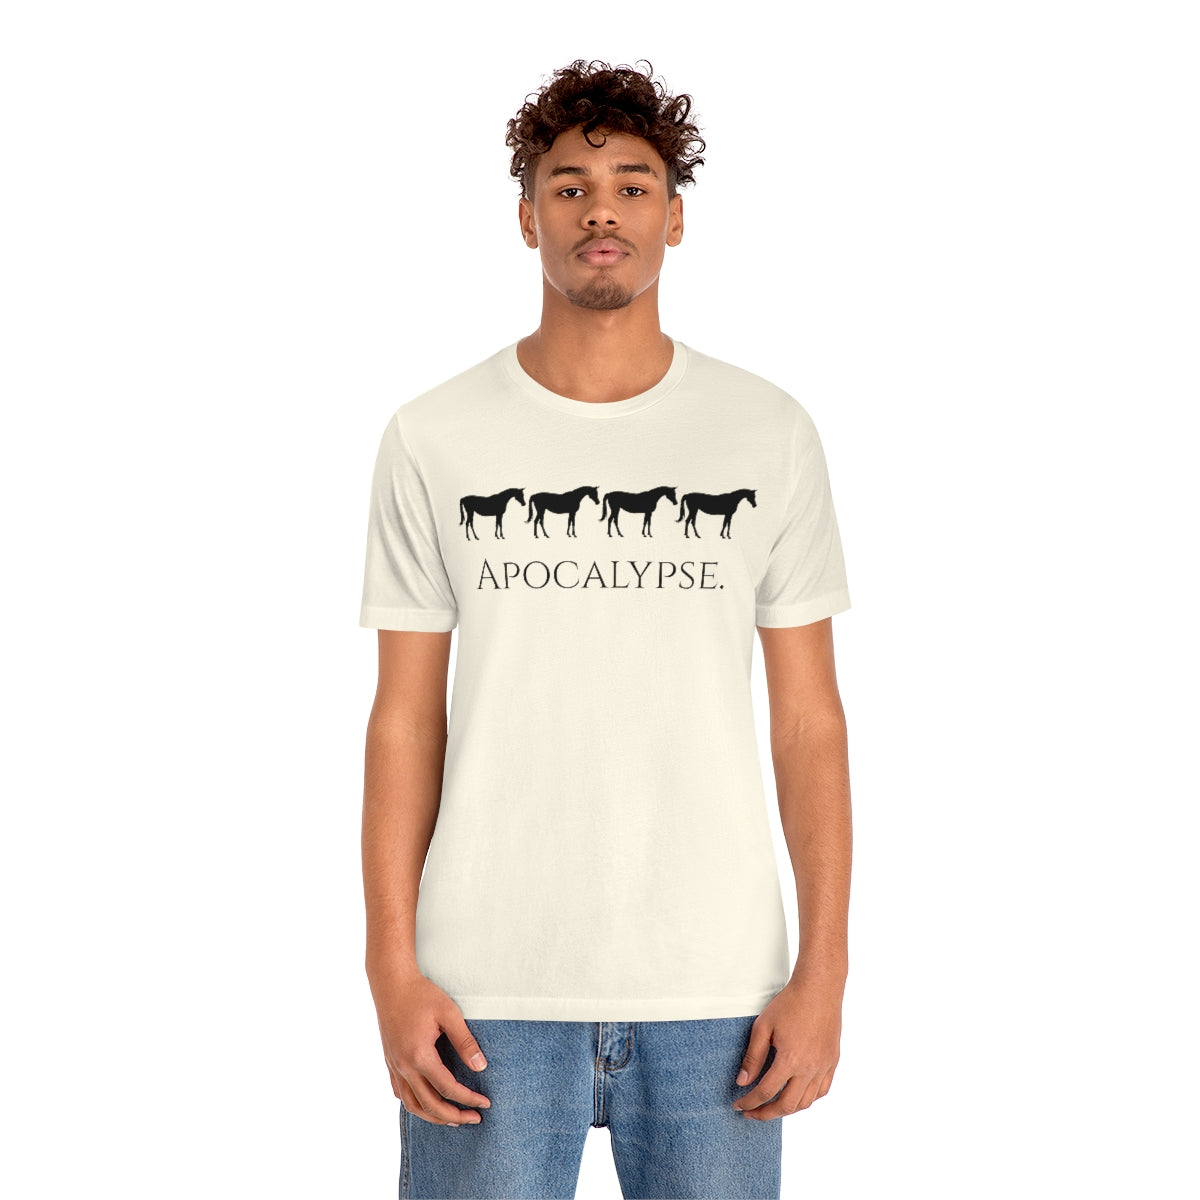 Five Horses (Horsemen) of the Apocalypse Funny T-shirt